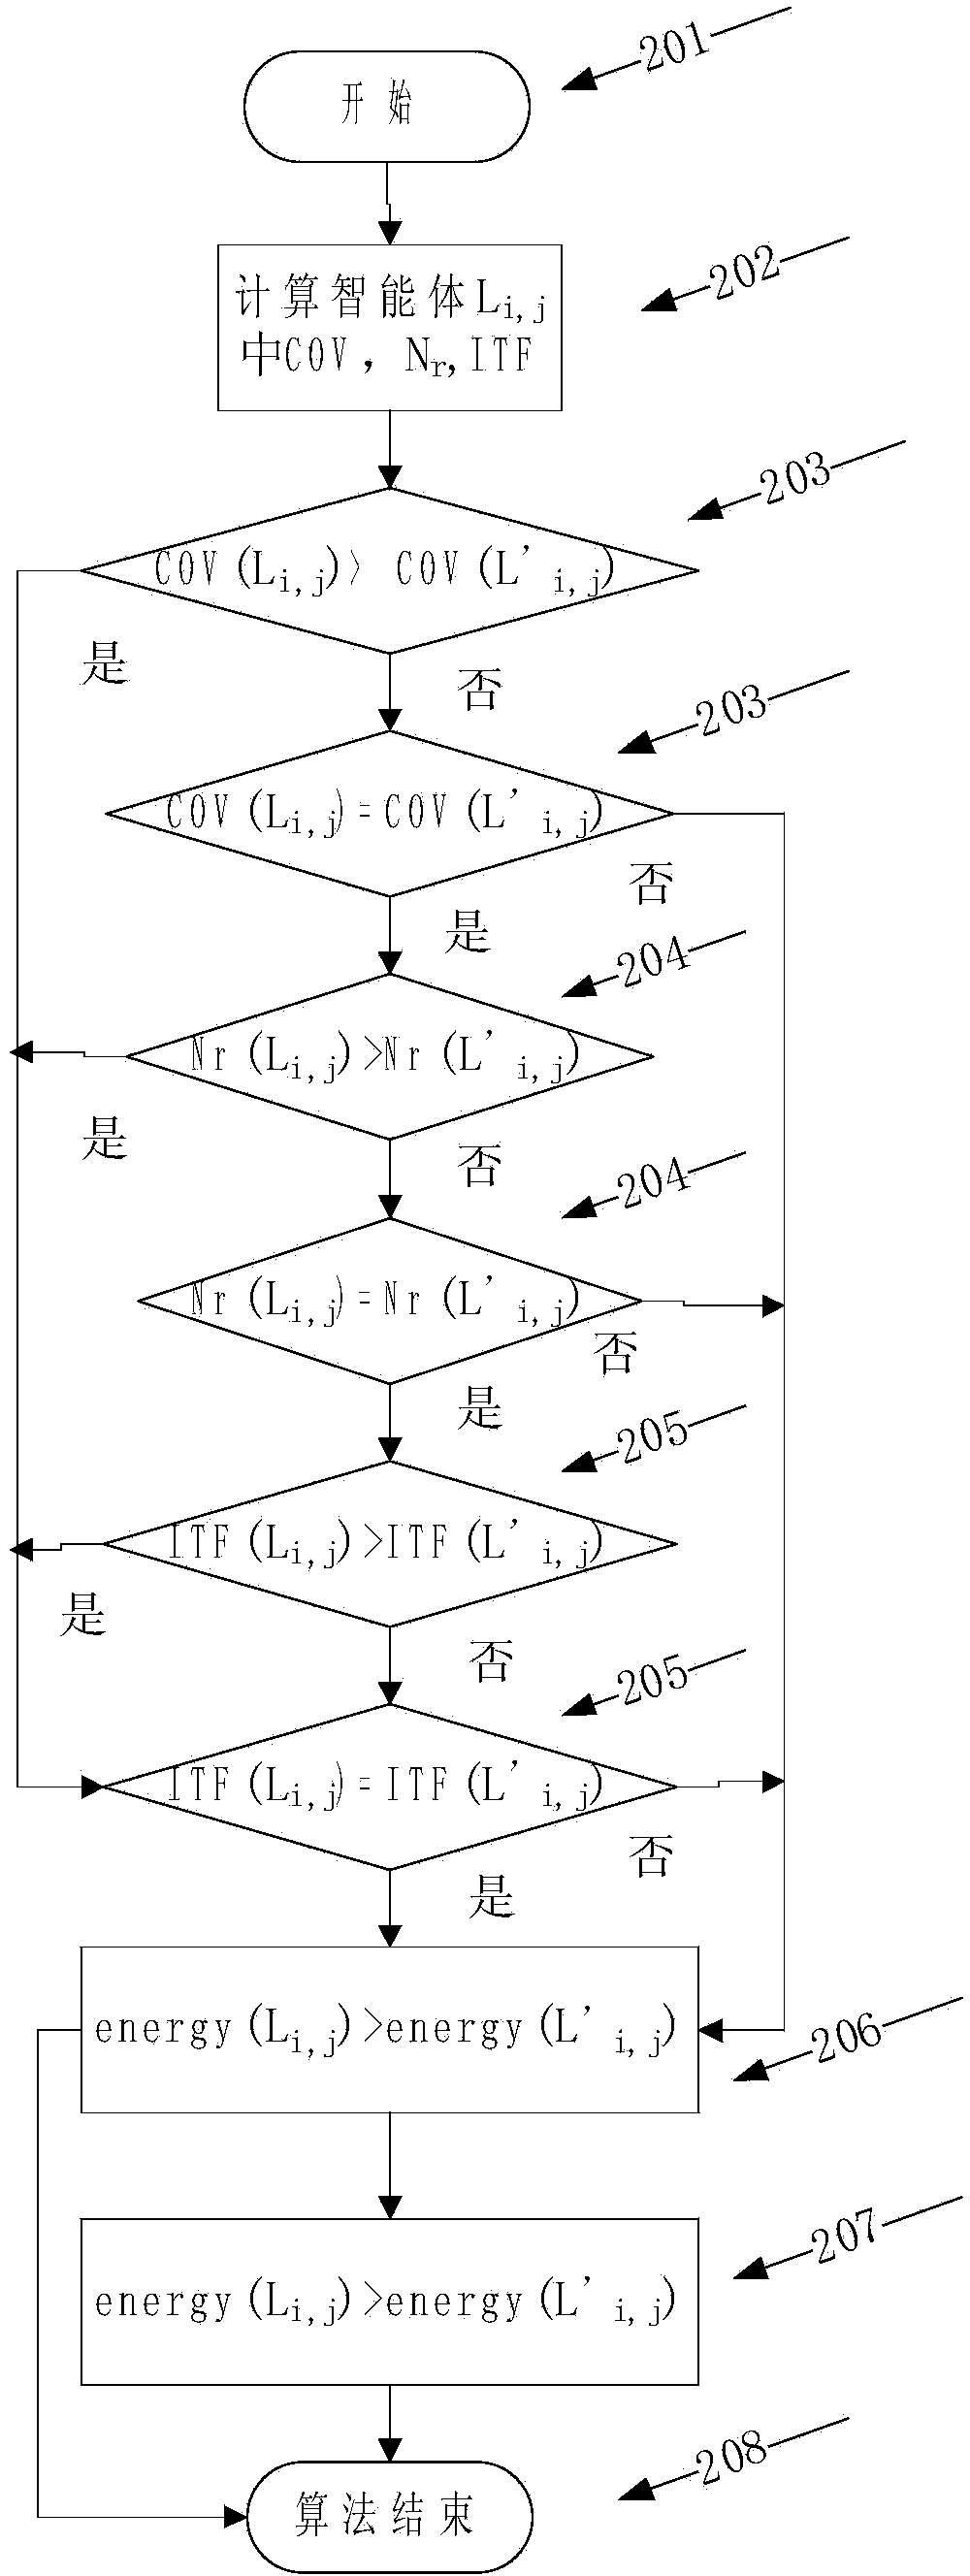 RFID network topology method based on multi-agent evolutionary algorithm